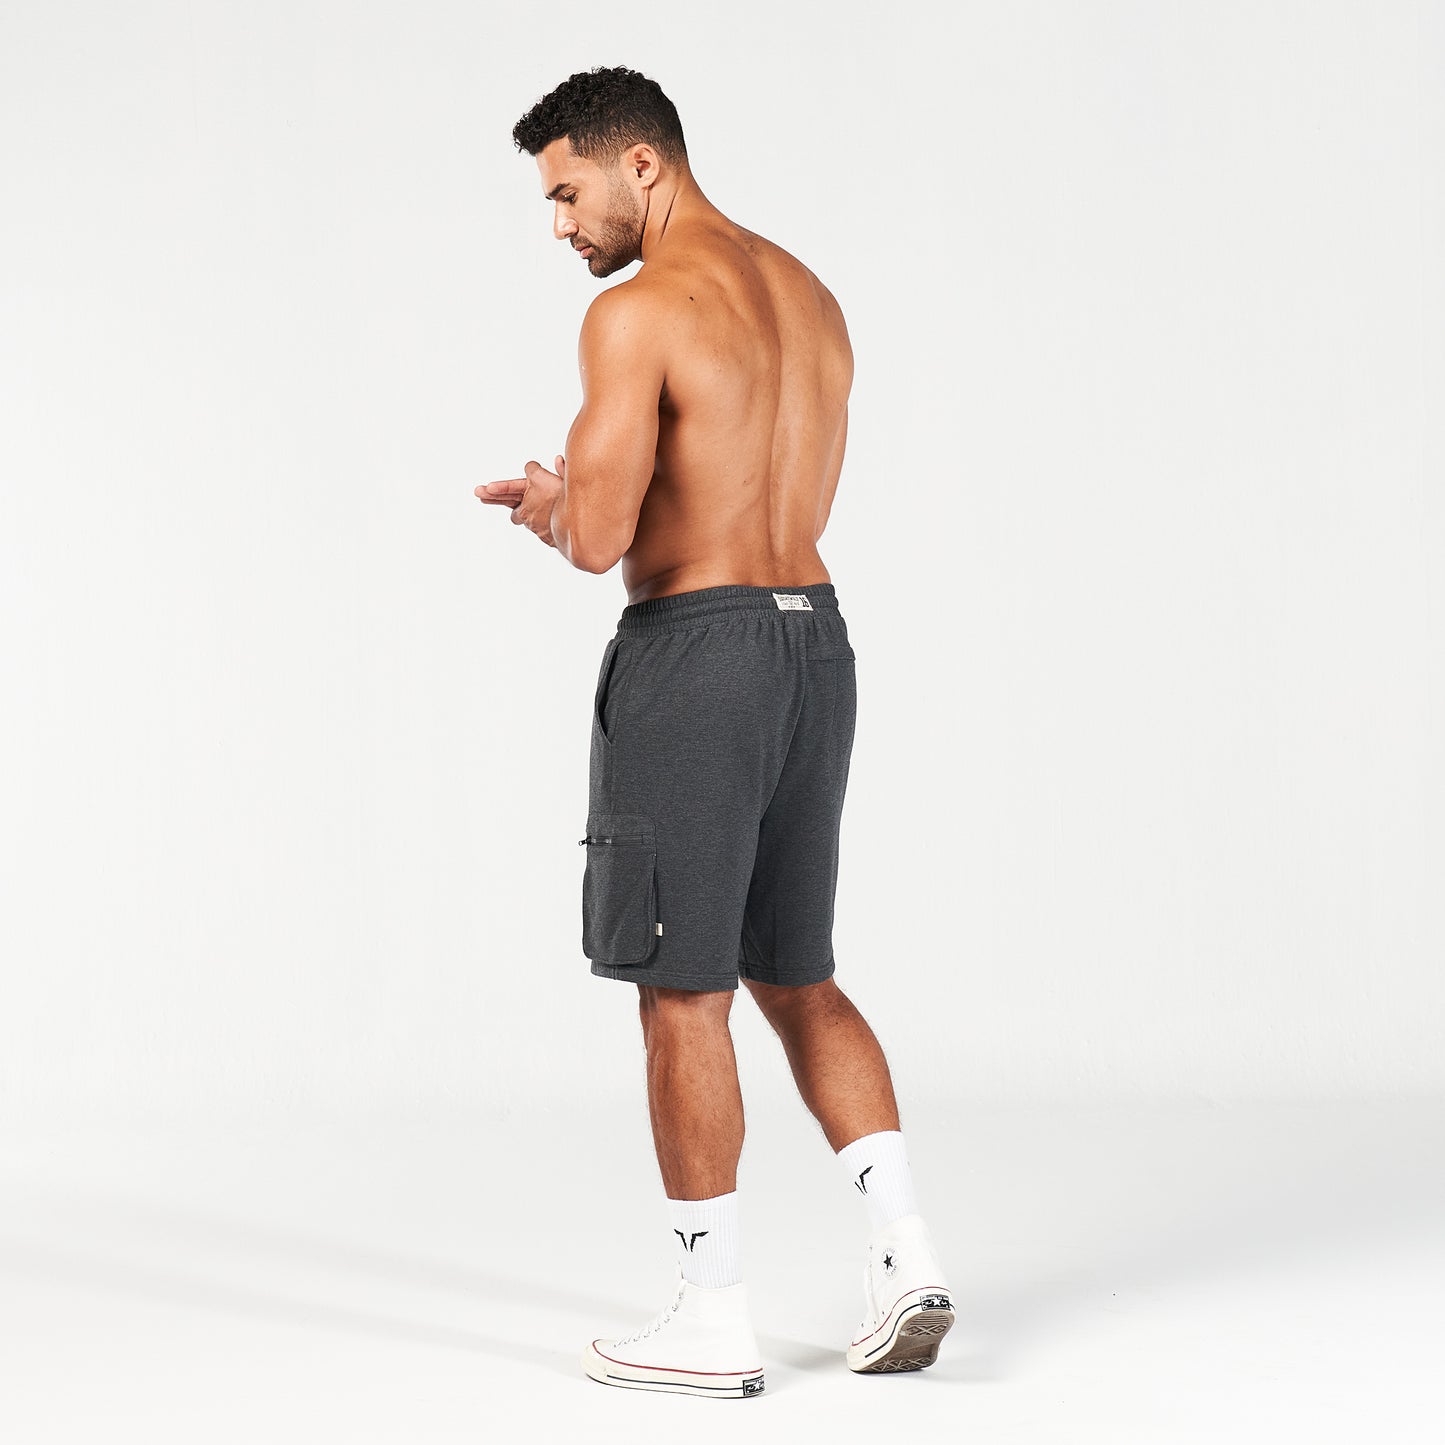 squatwolf-gym-wear-golden-era-new-gen-jogger-shorts-black-marl-workout-short-for-men